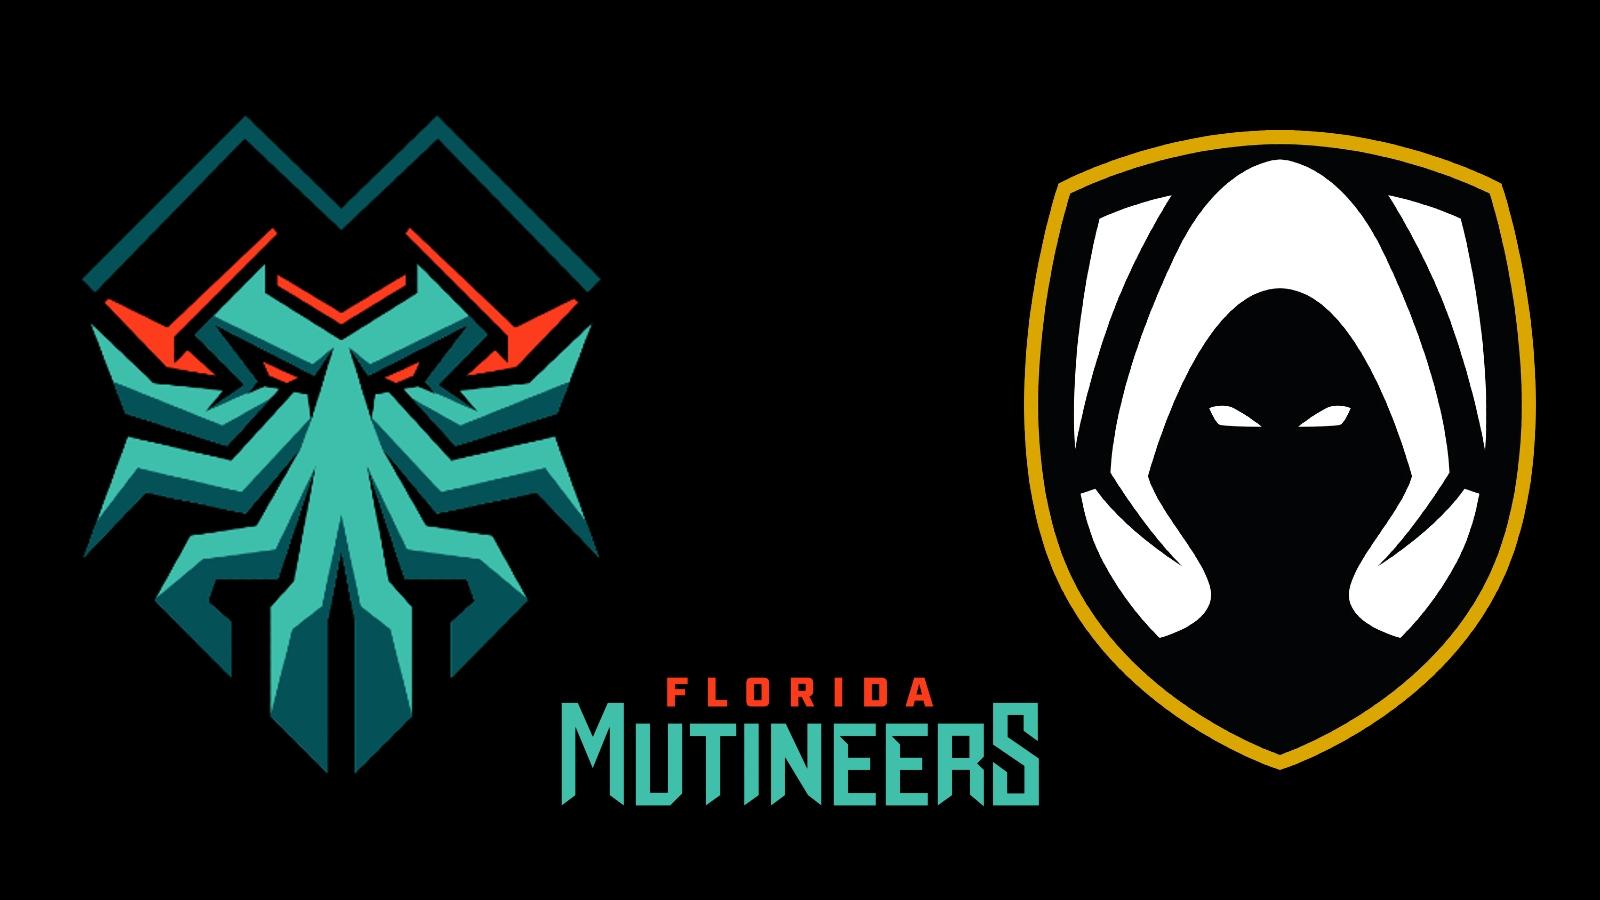 Florida Mutineers and Team Heretics logos on black background